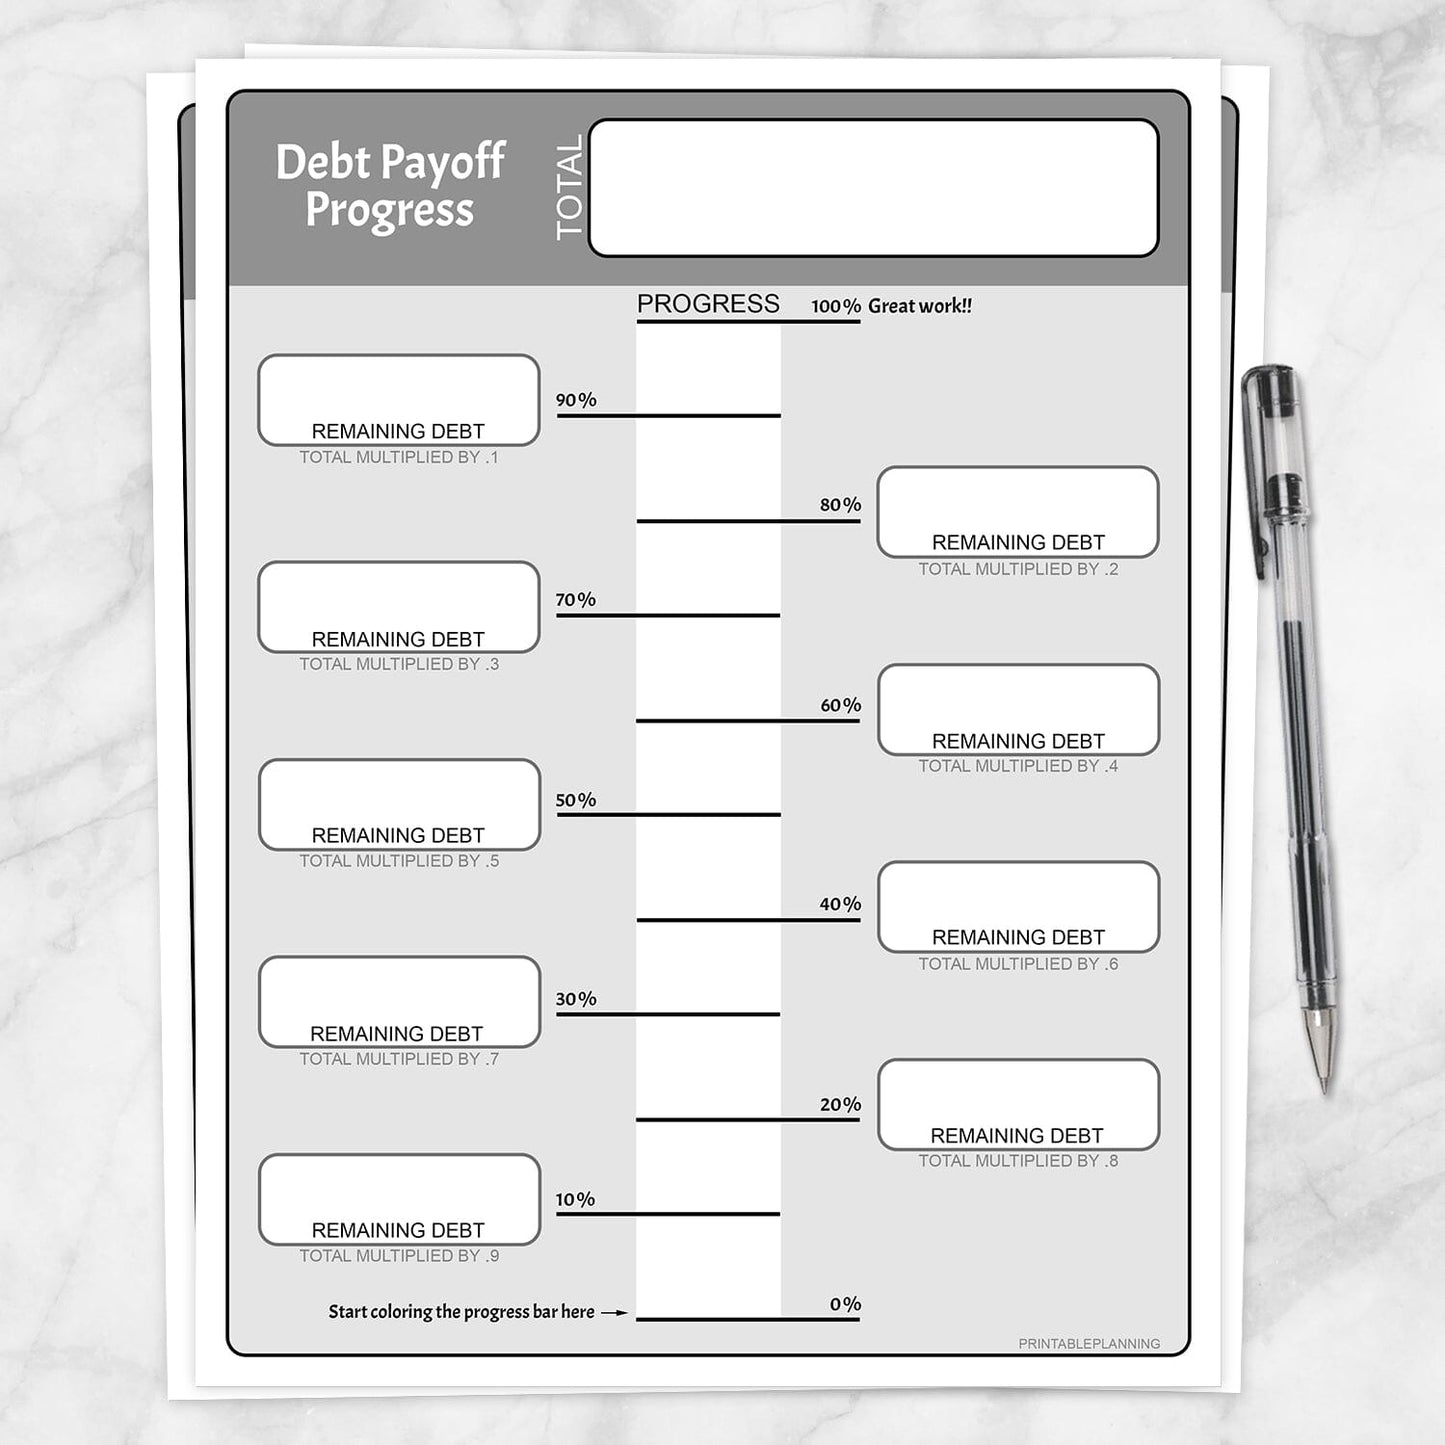 Printable Remaining Debt Payoff Progress Bar Worksheets in Gray at Printable Planning.